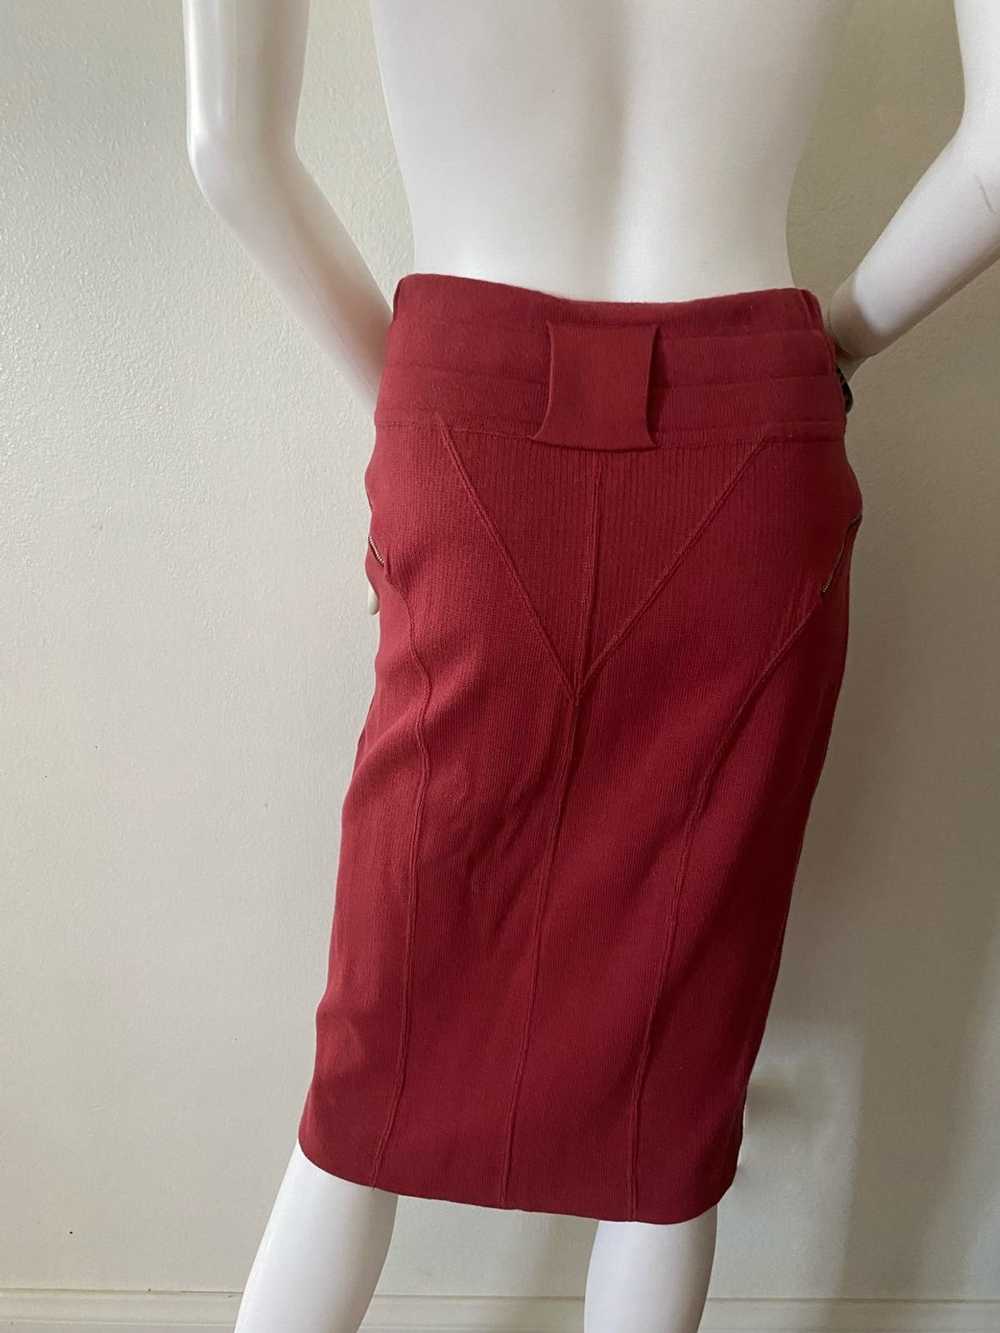 Alaia Vintage Alaïa Paris Zipper Skirt 1986 - image 2